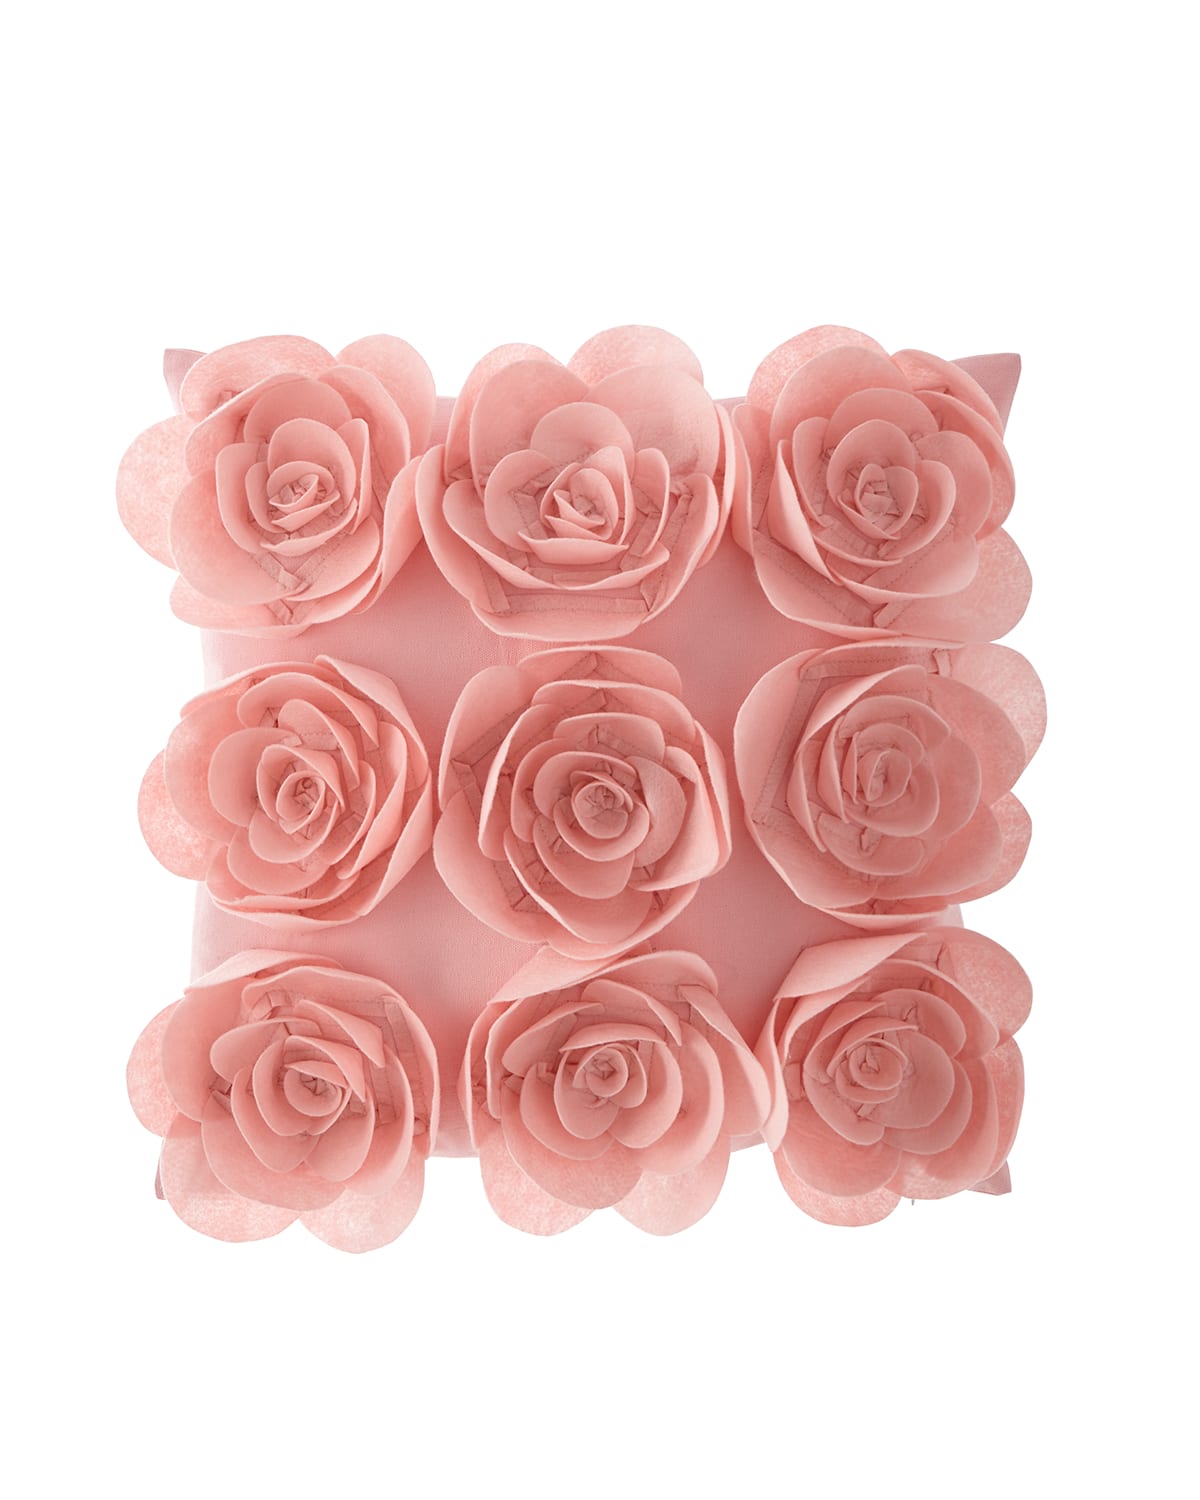 Image Design Source Floral Pillow